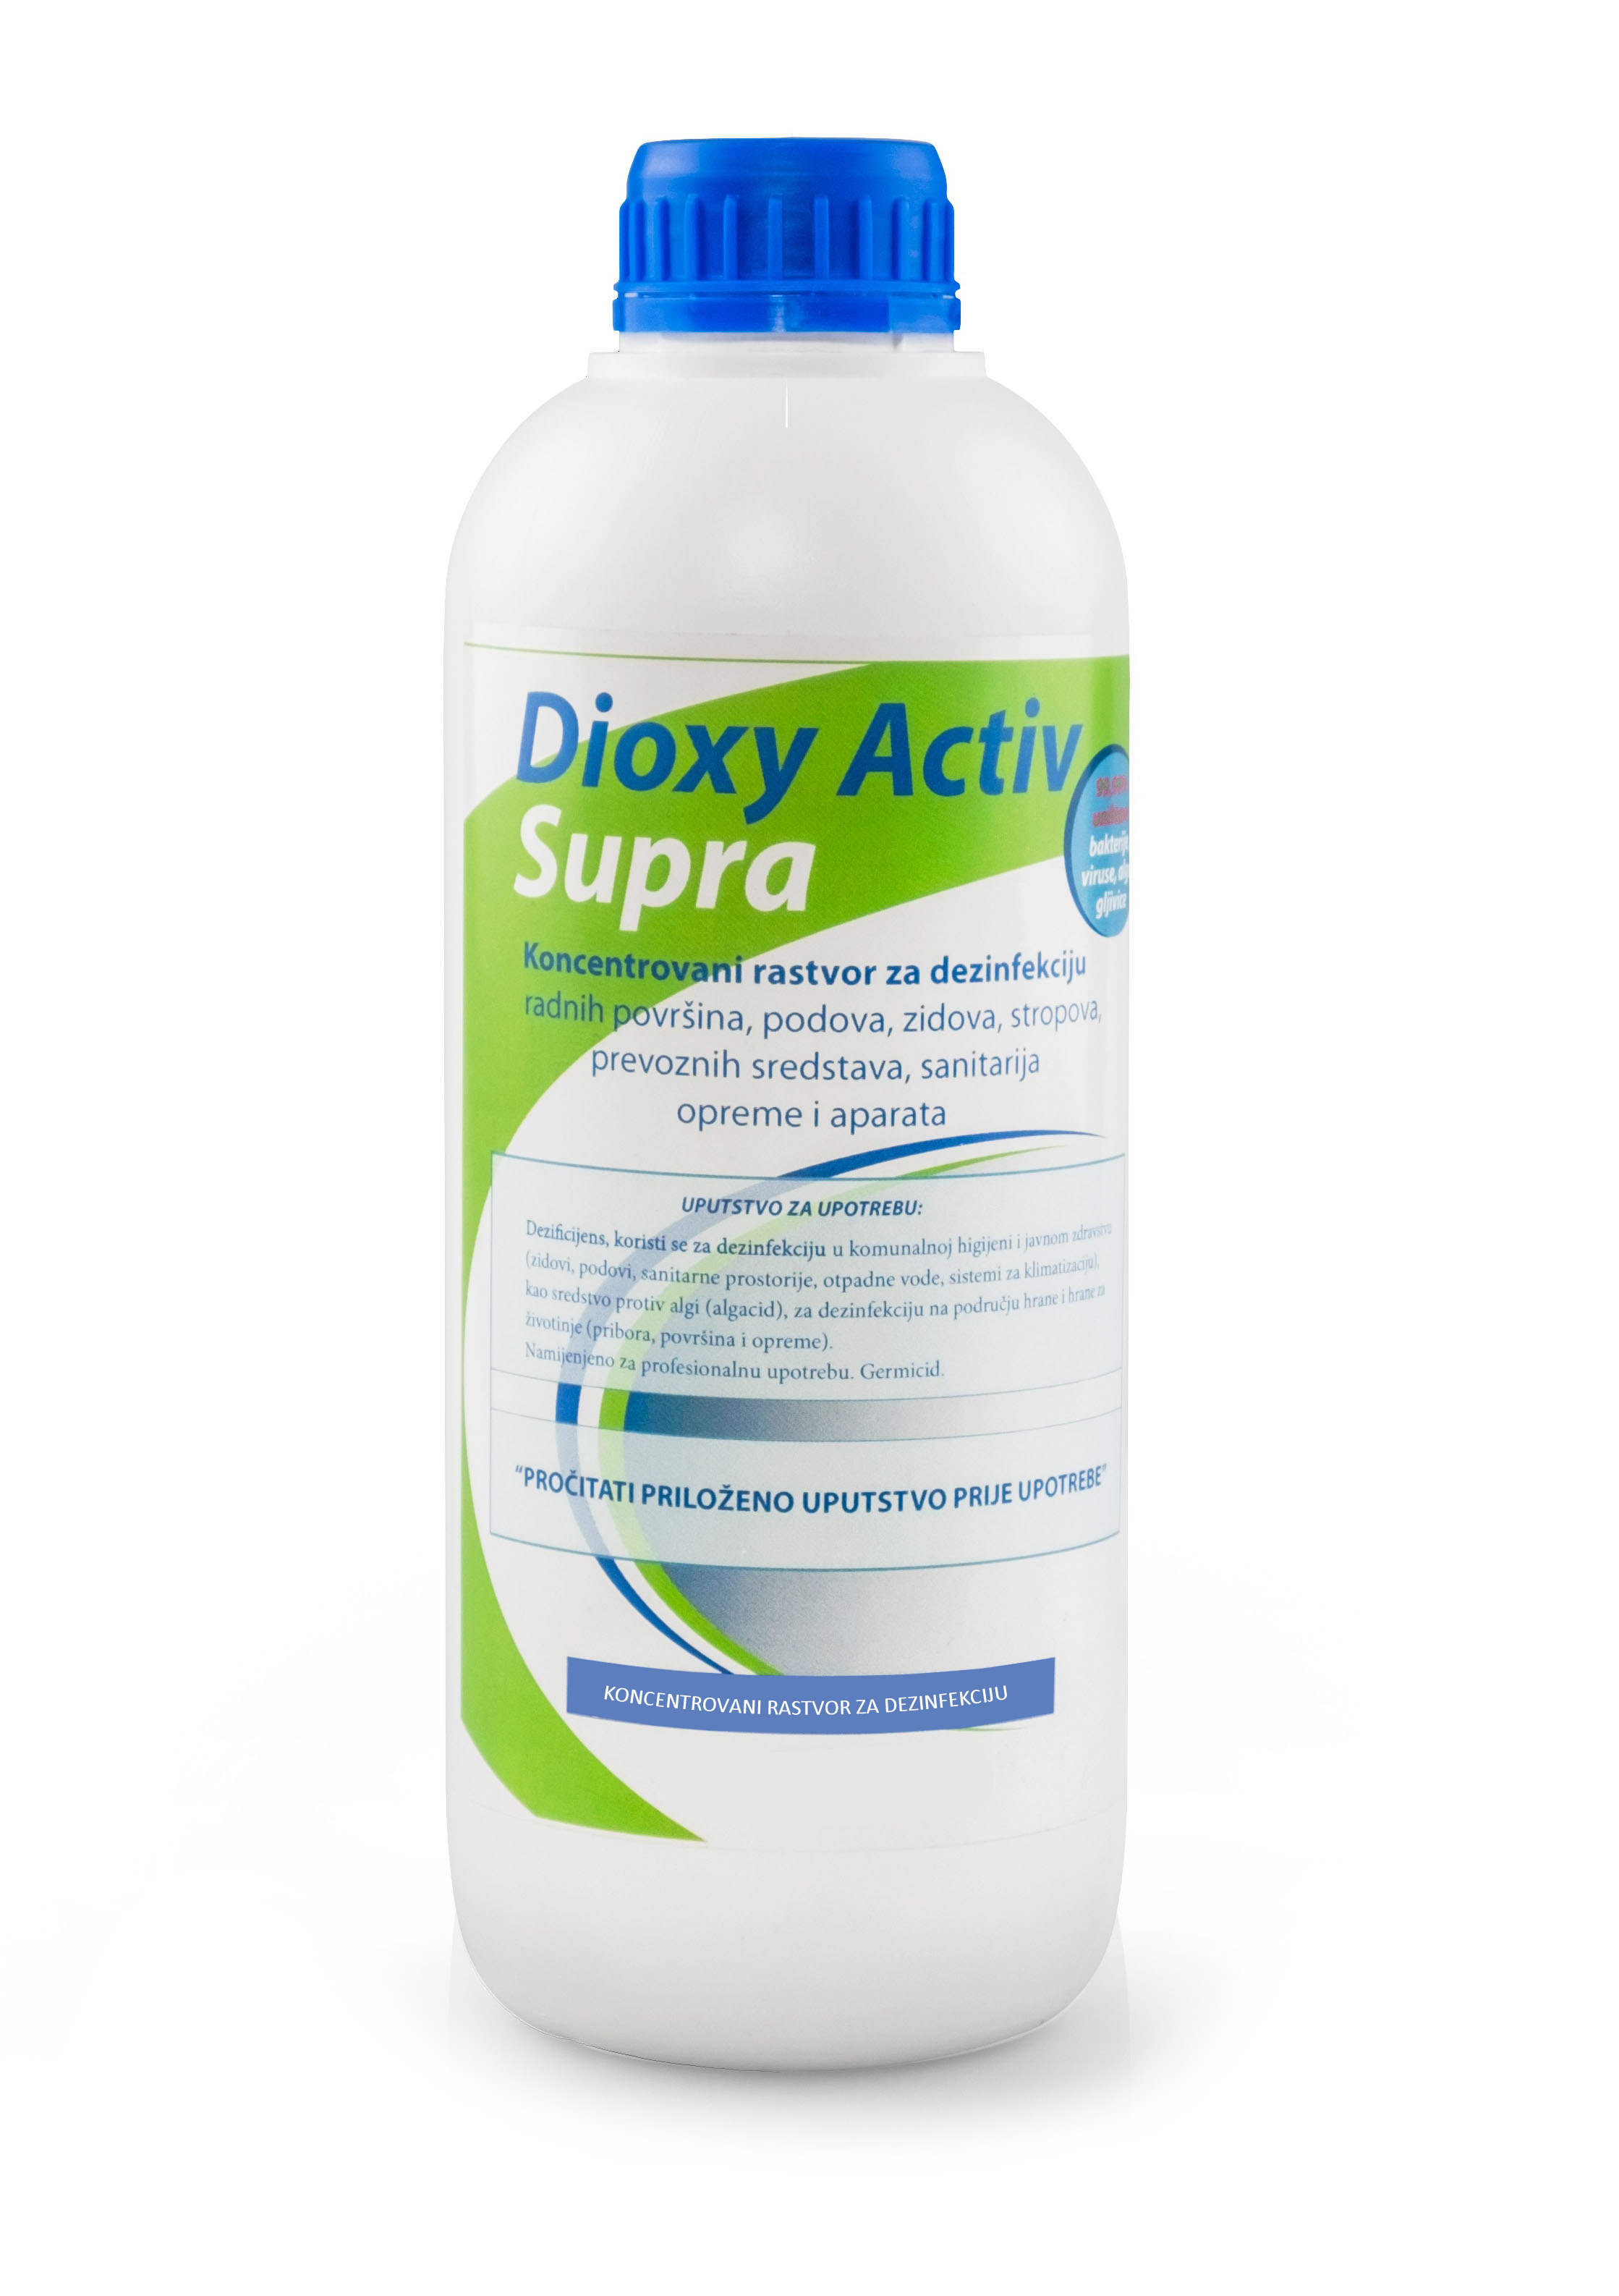 dioxy-activ-supra-home-bez-sjenke-done